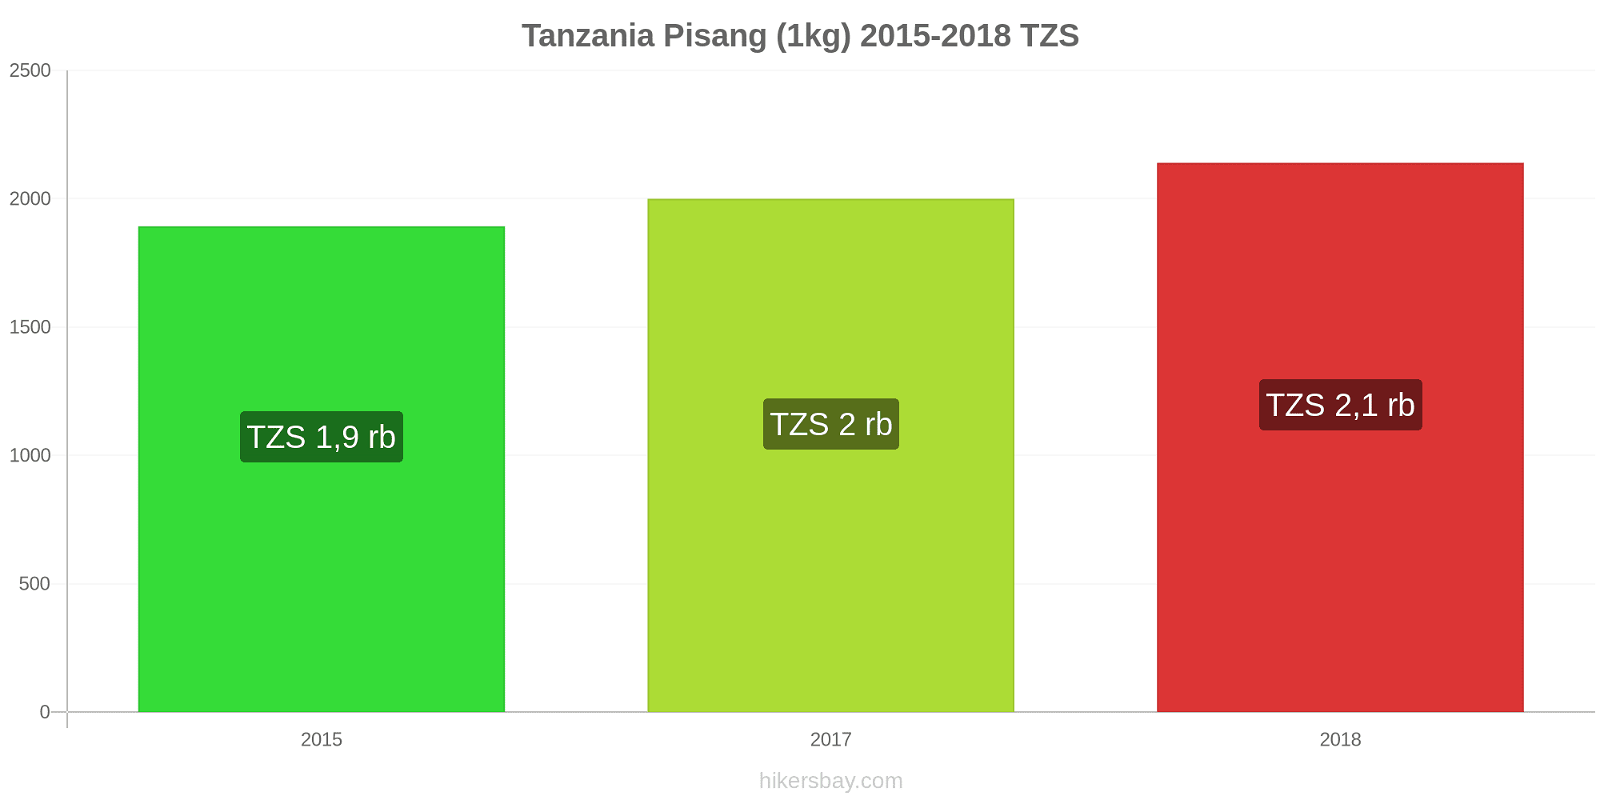 Tanzania perubahan harga Pisang (1kg) hikersbay.com